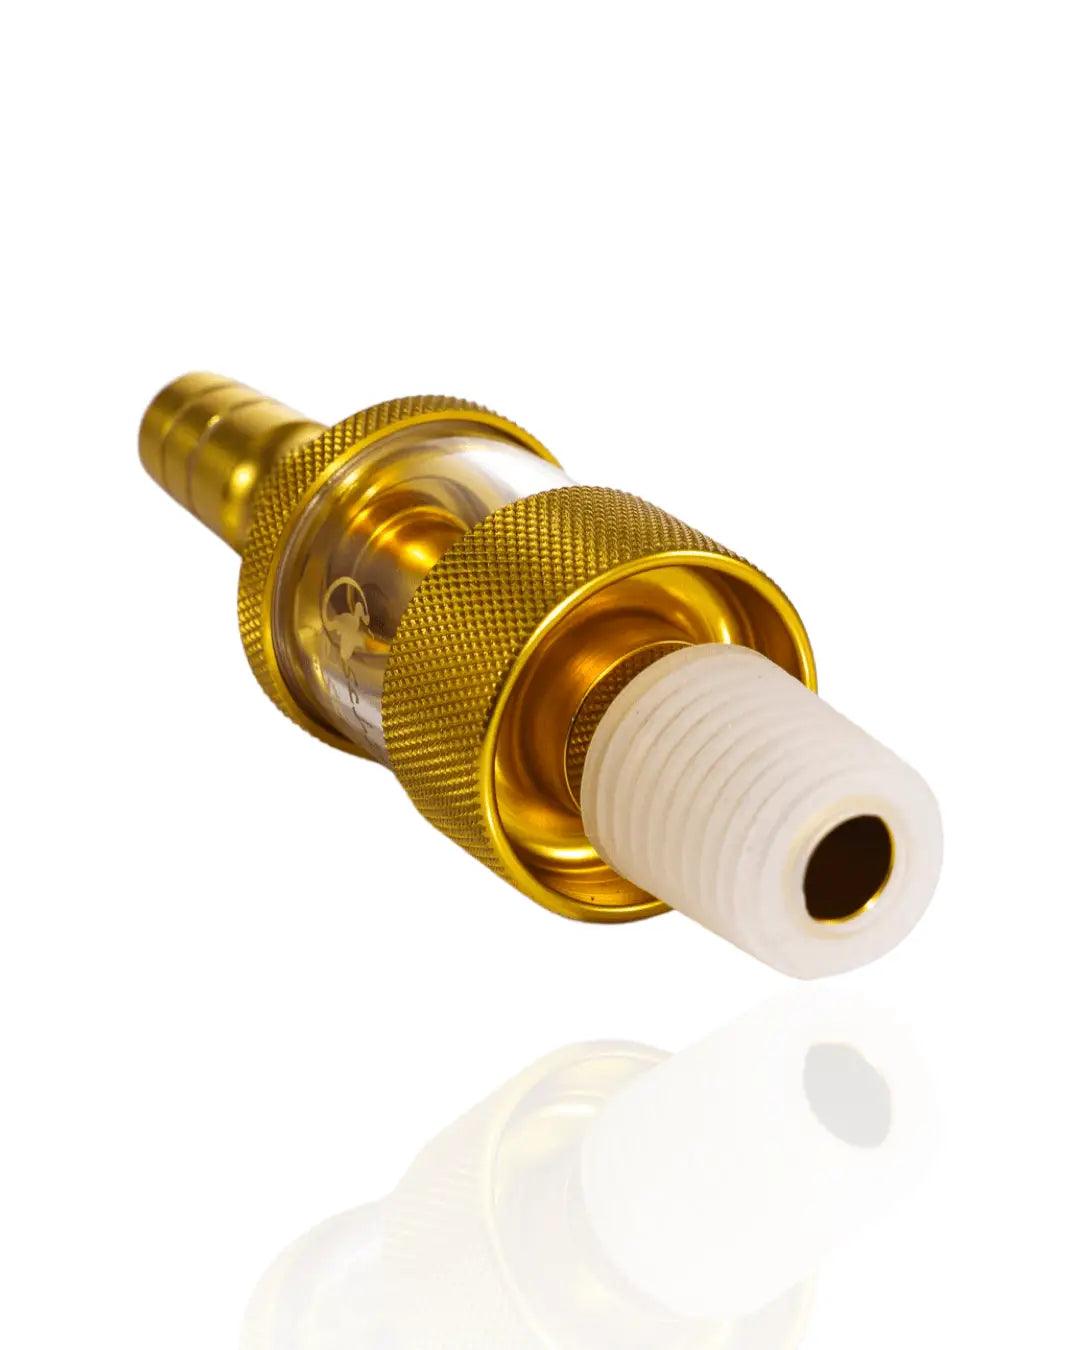 Molassefänger mit Adapter & Ultra Grip Gold - Dschinni GmbH